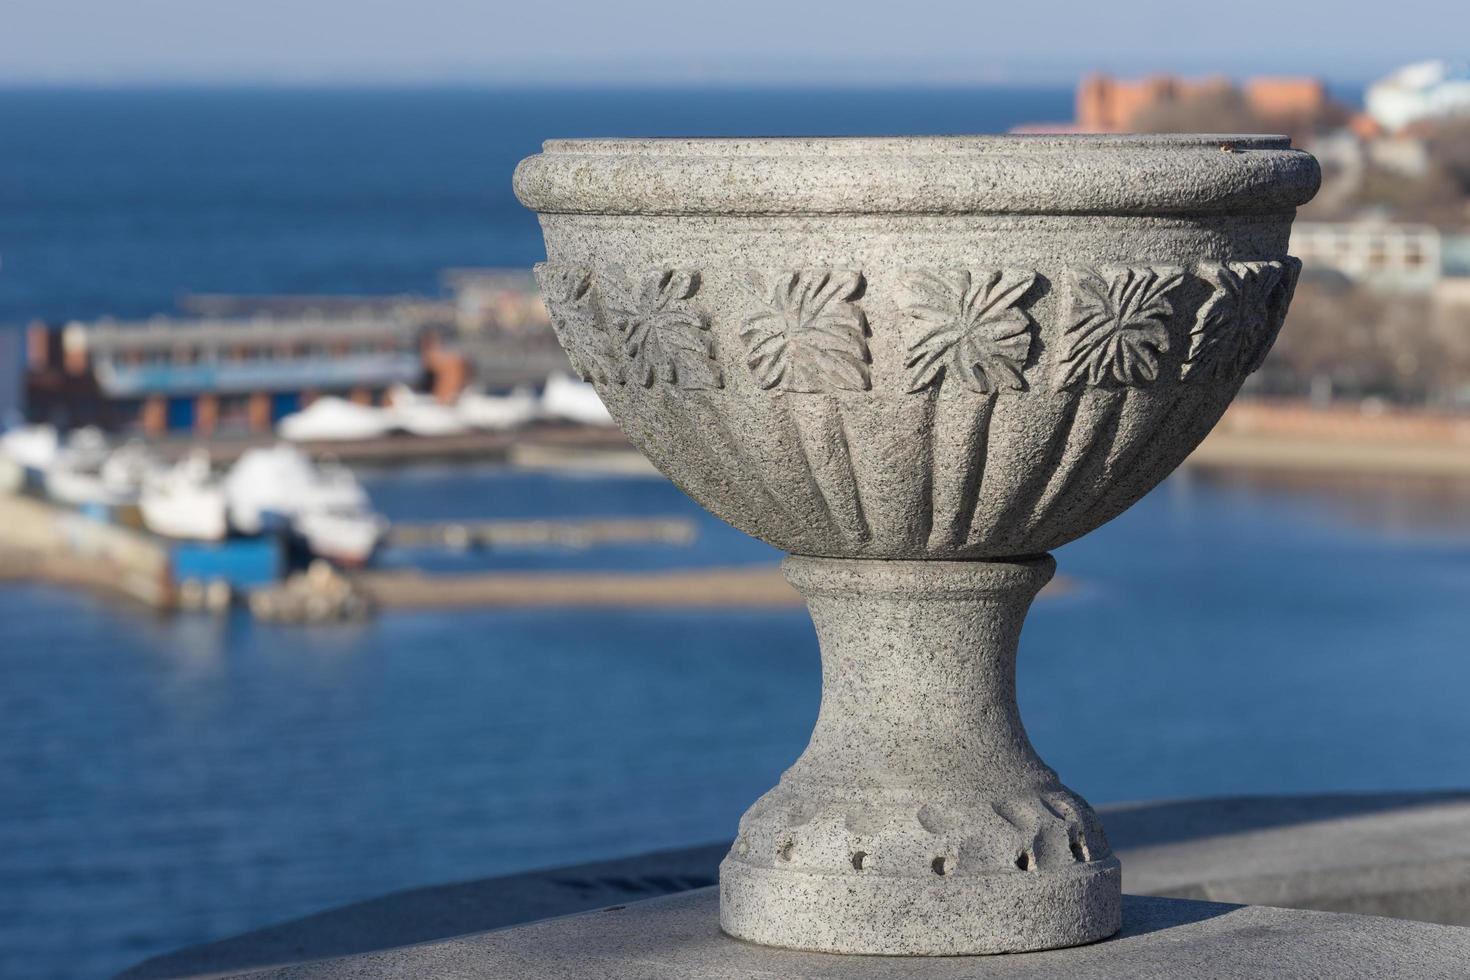 vaso de pedra decorativa com uma marina turva em vladivostok, rússia foto